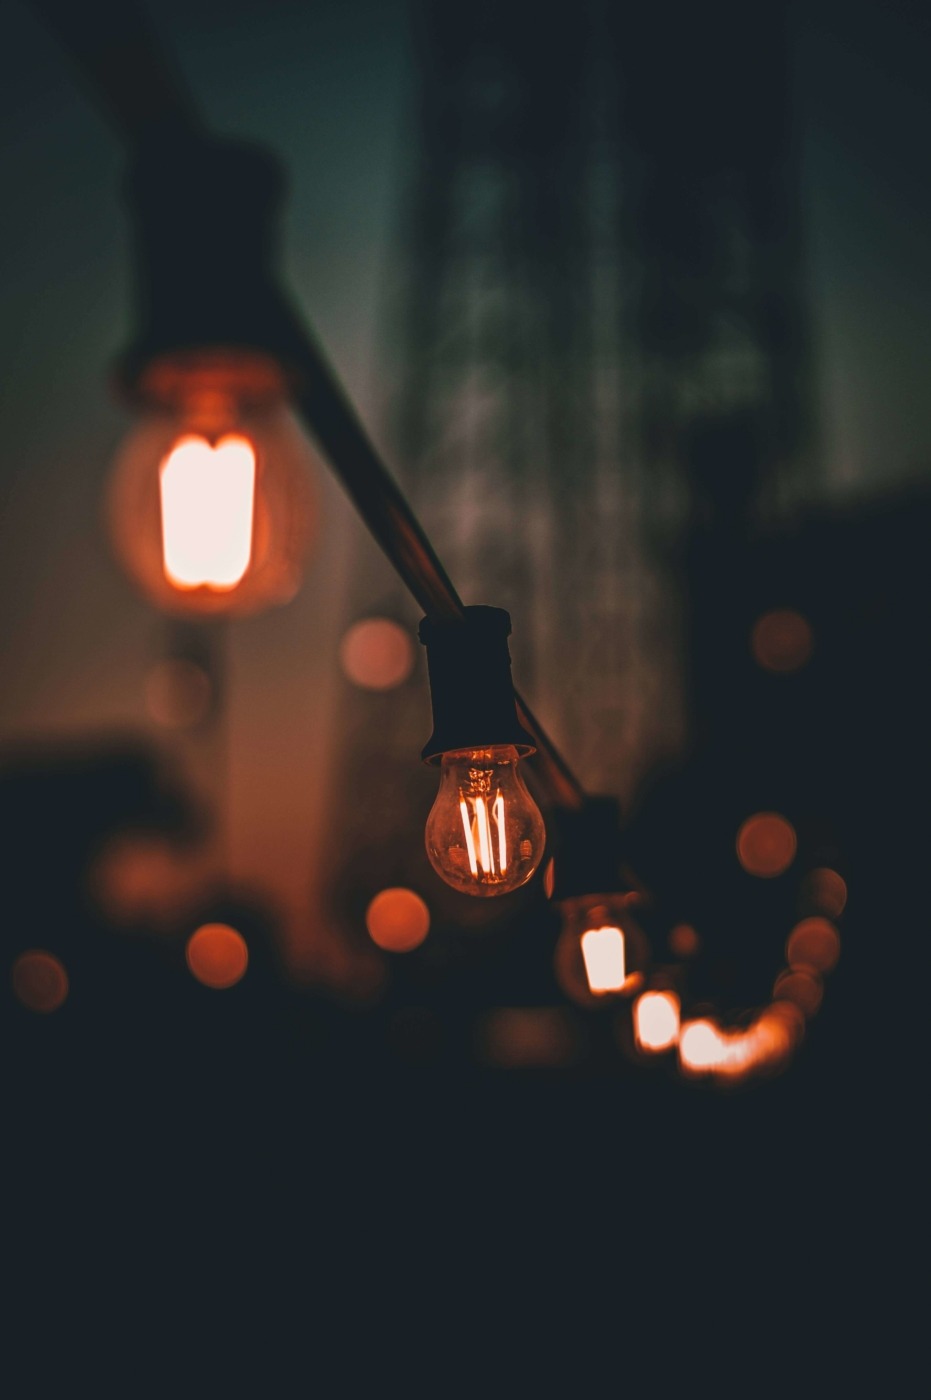 Image: A string of lightbulbs in a dark setting / Unsplash